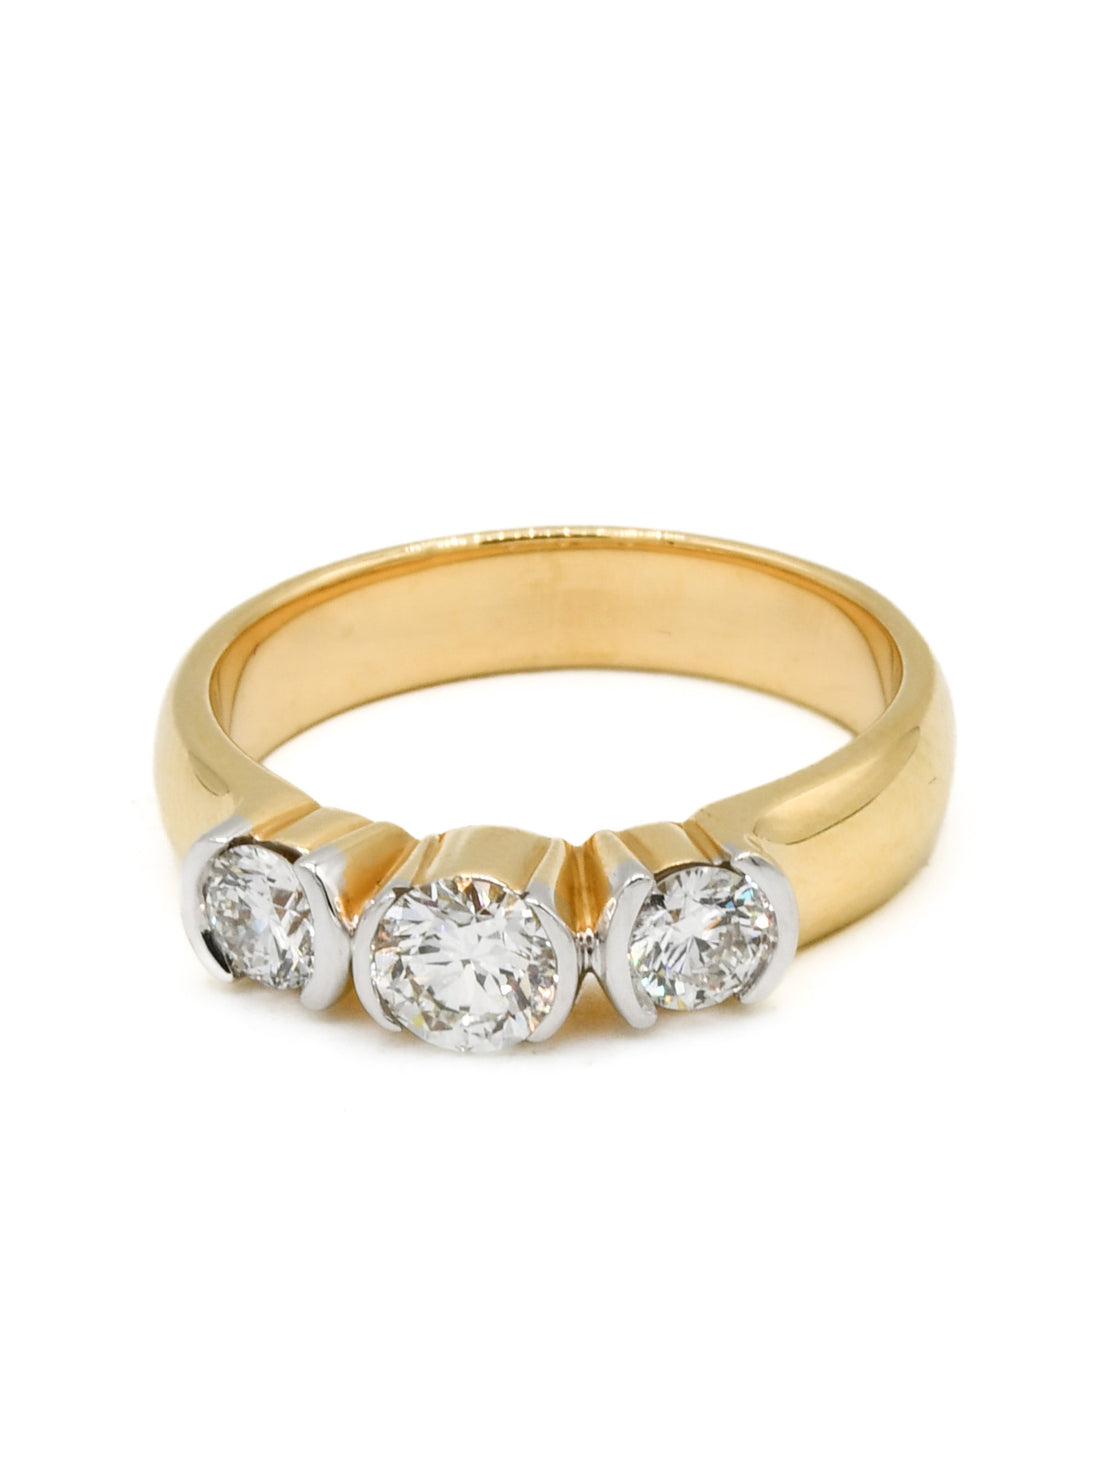 18ct Gold 0.75ct Diamond Ladies Ring - Roop Darshan